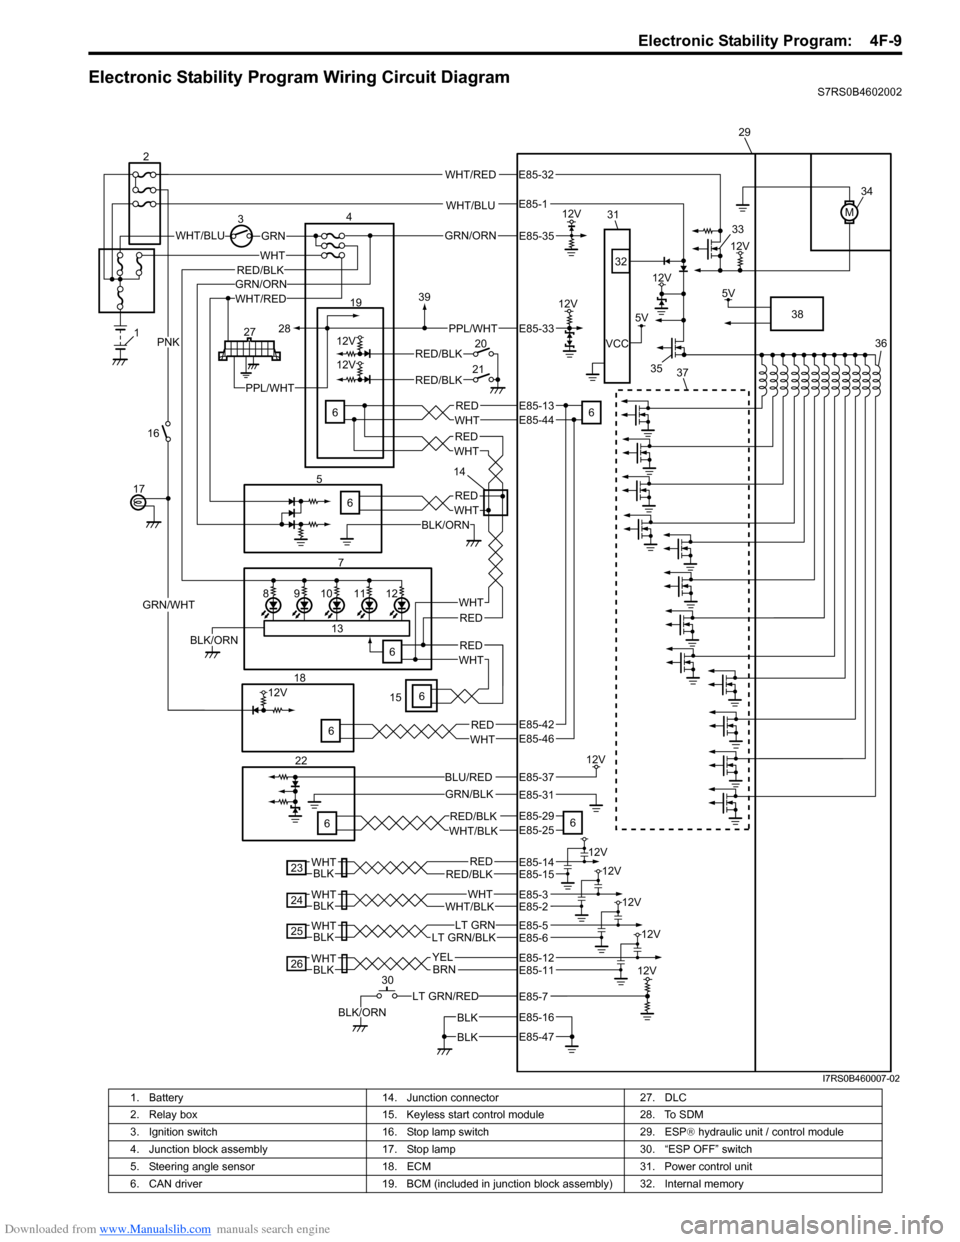 SUZUKI SWIFT 2006 2.G Service Manual PDF Downloaded from www.Manualslib.com manuals search engine Electronic Stability Program:  4F-9
Electronic Stability Program Wiring Circuit DiagramS7RS0B4602002
WHT/BLU
WHT/BLUGRN
M
12V3
12V
5V
12V
VCC
W